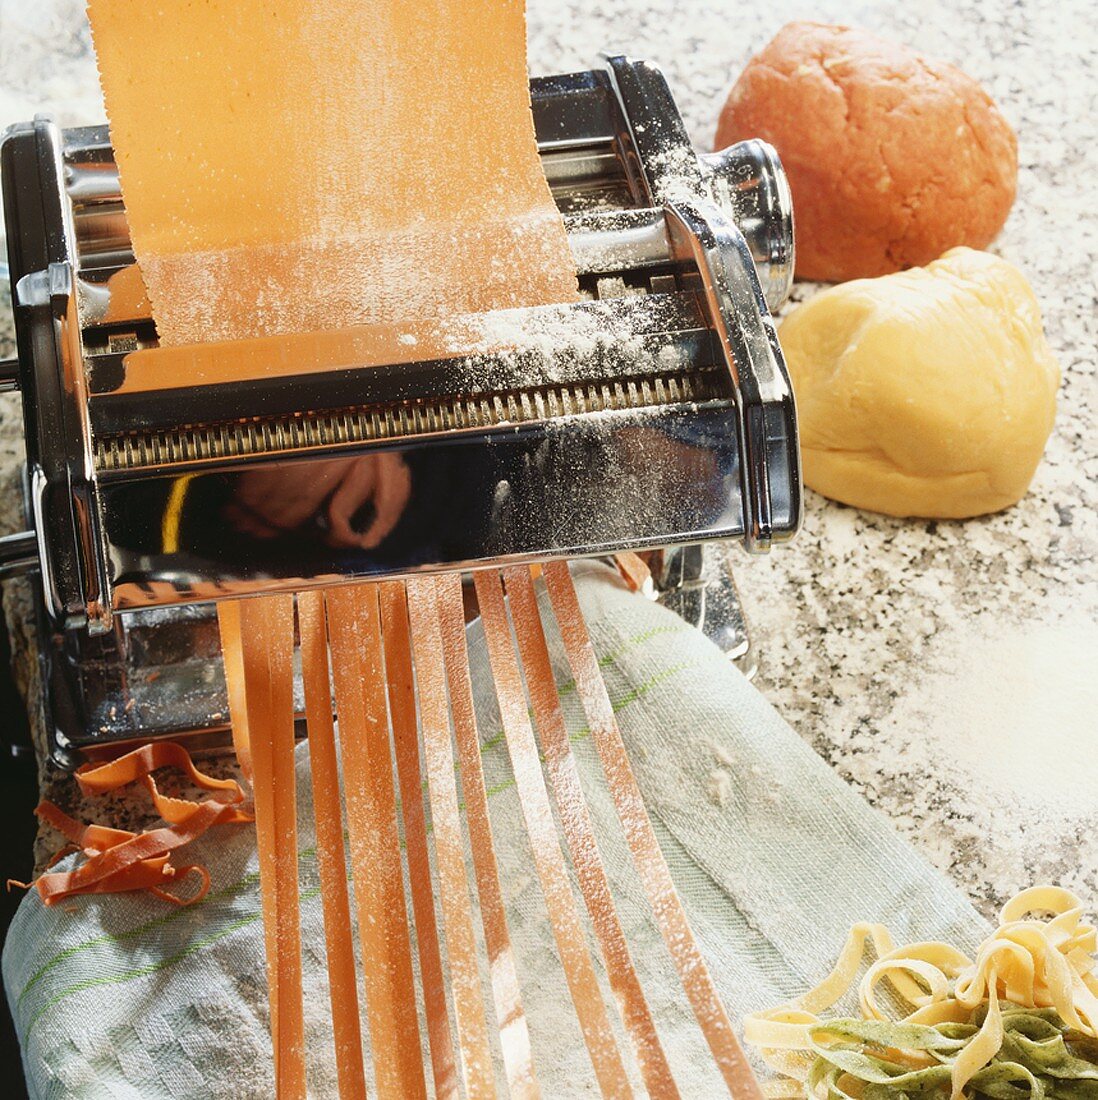 Red pasta dough passing through a pasta maker